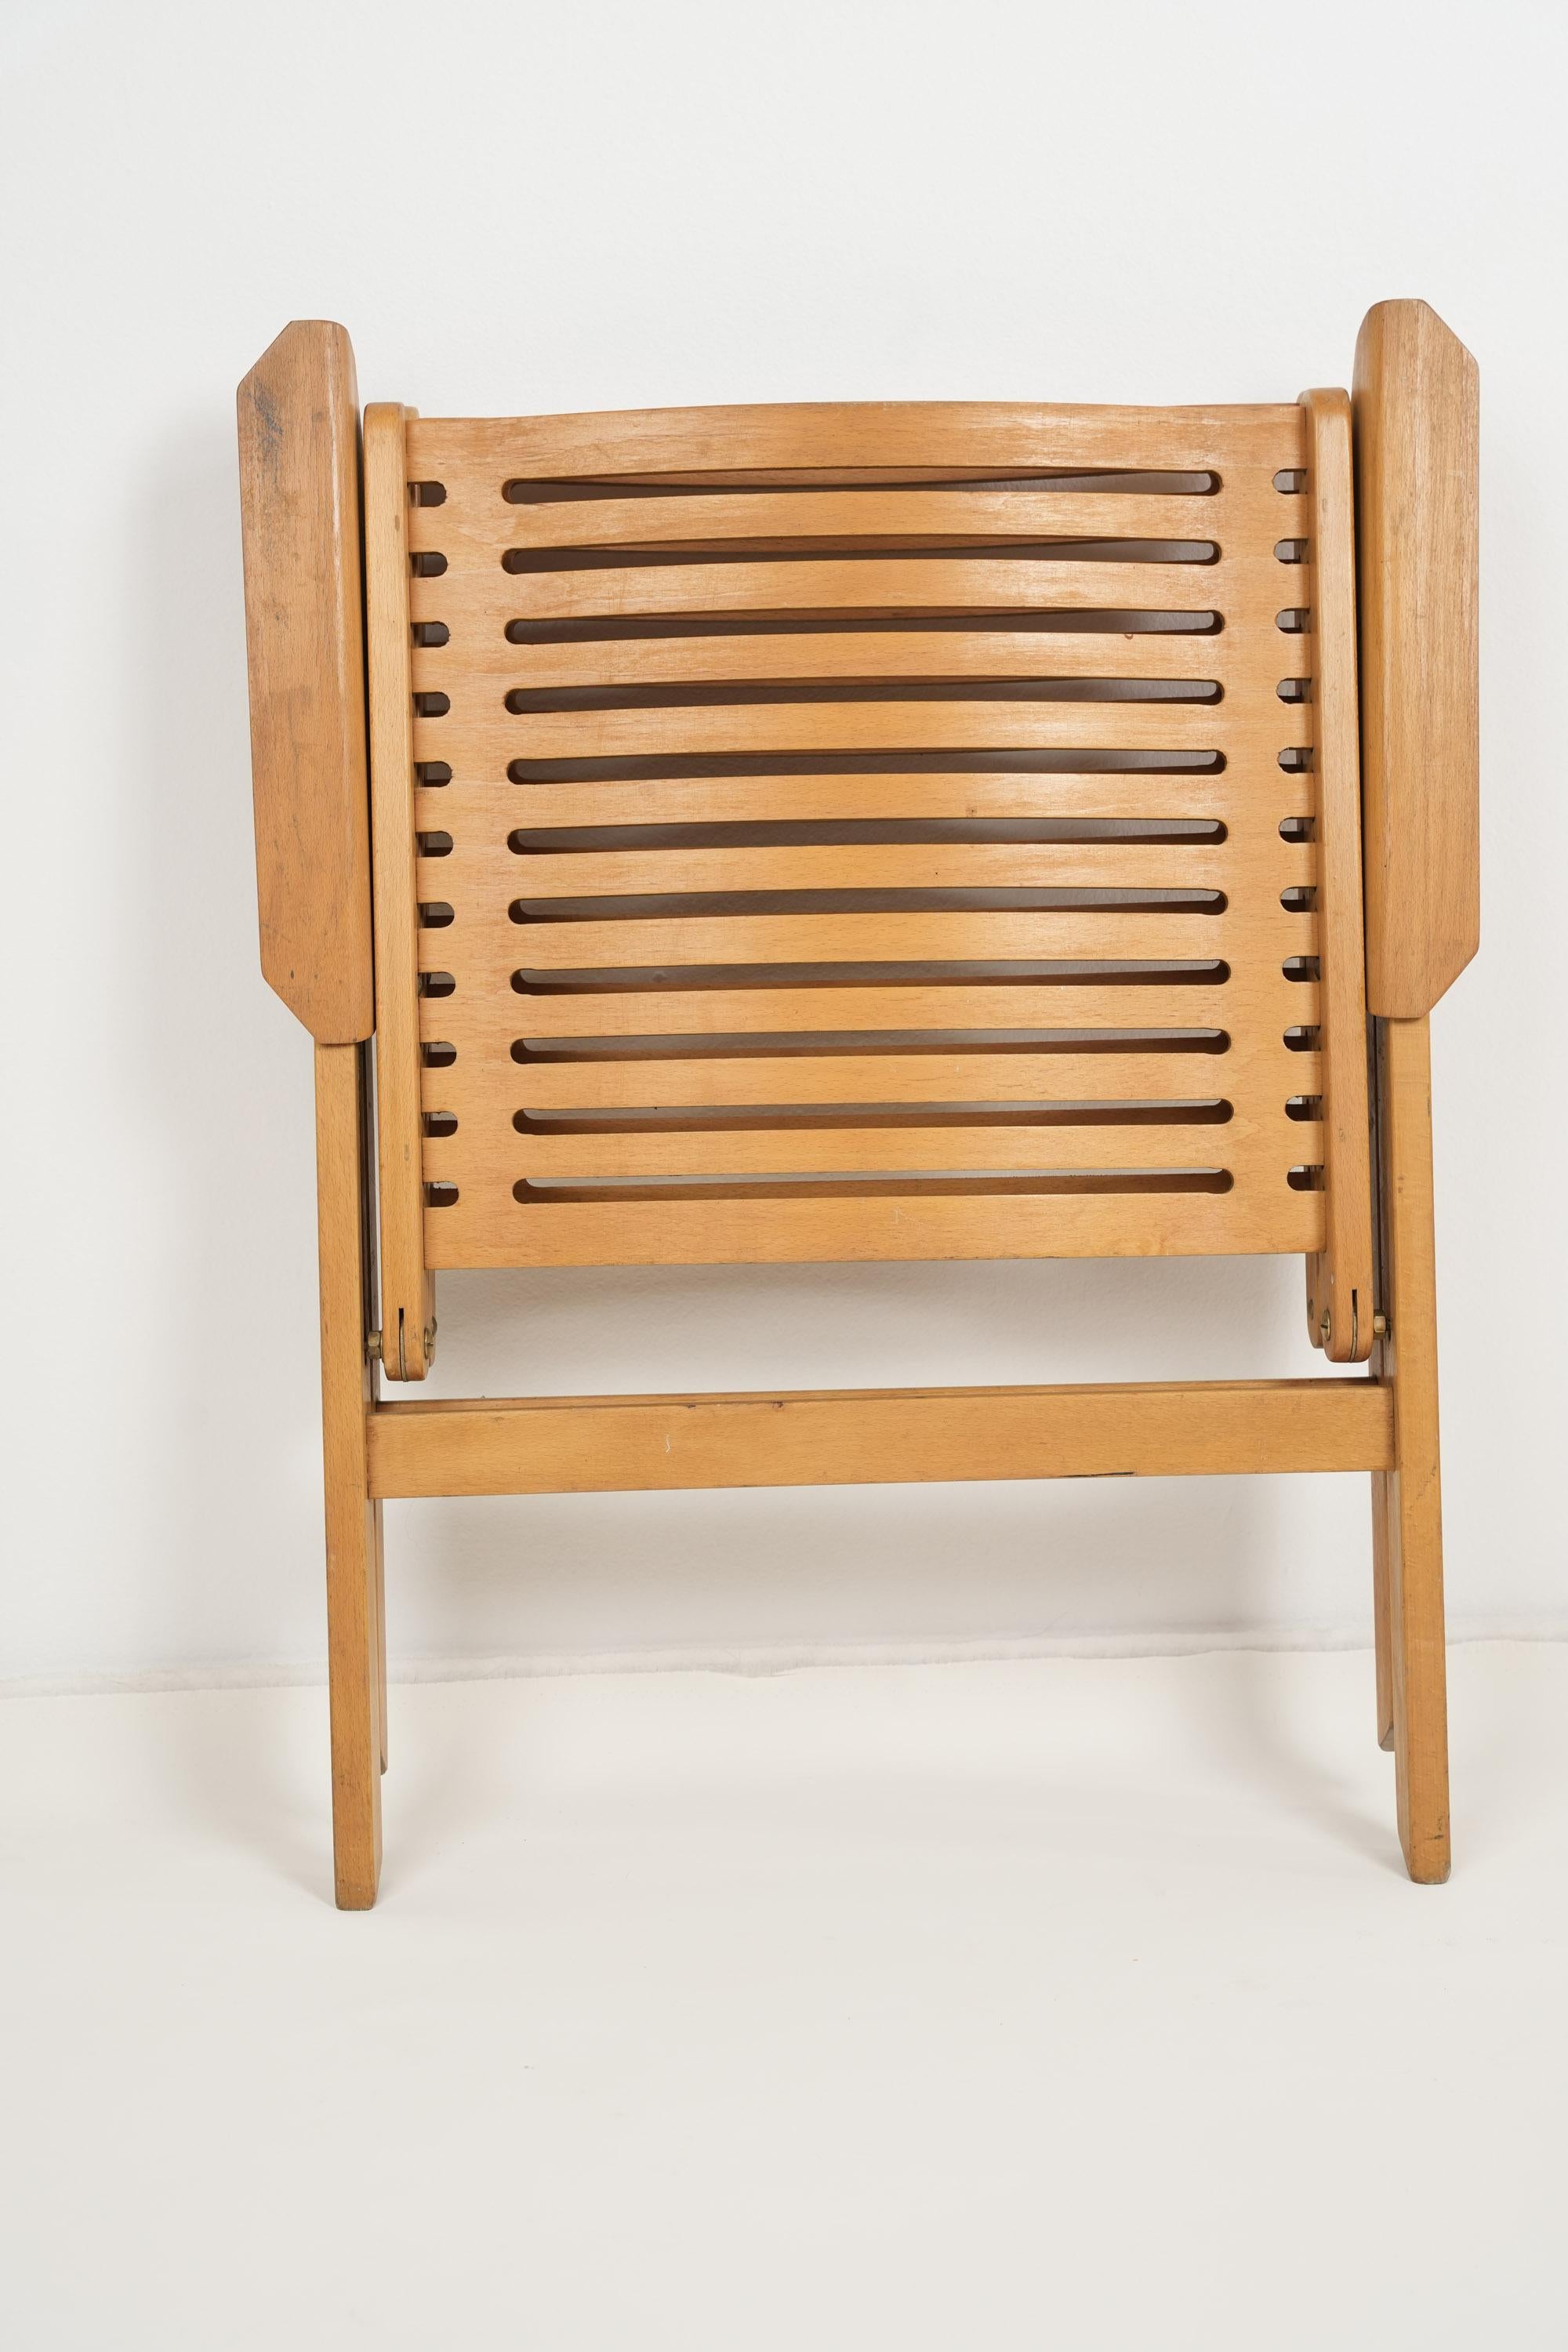 Folding Chair REX By Niko Kralj for Stol Kamnik Yugoslavia 1950s For Sale 3